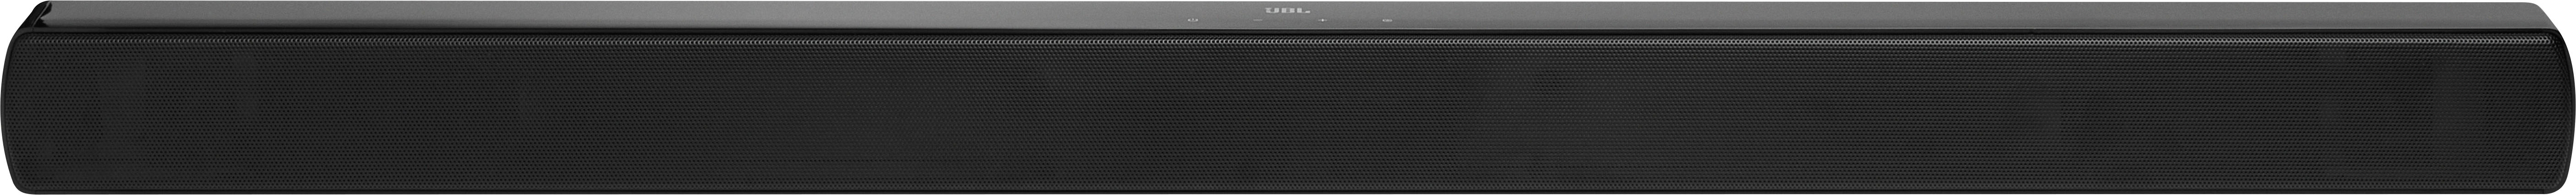 Left View: JBL - Cinema SB170 2.1 Channel Soundbar with Wireless Subwoofer - Black